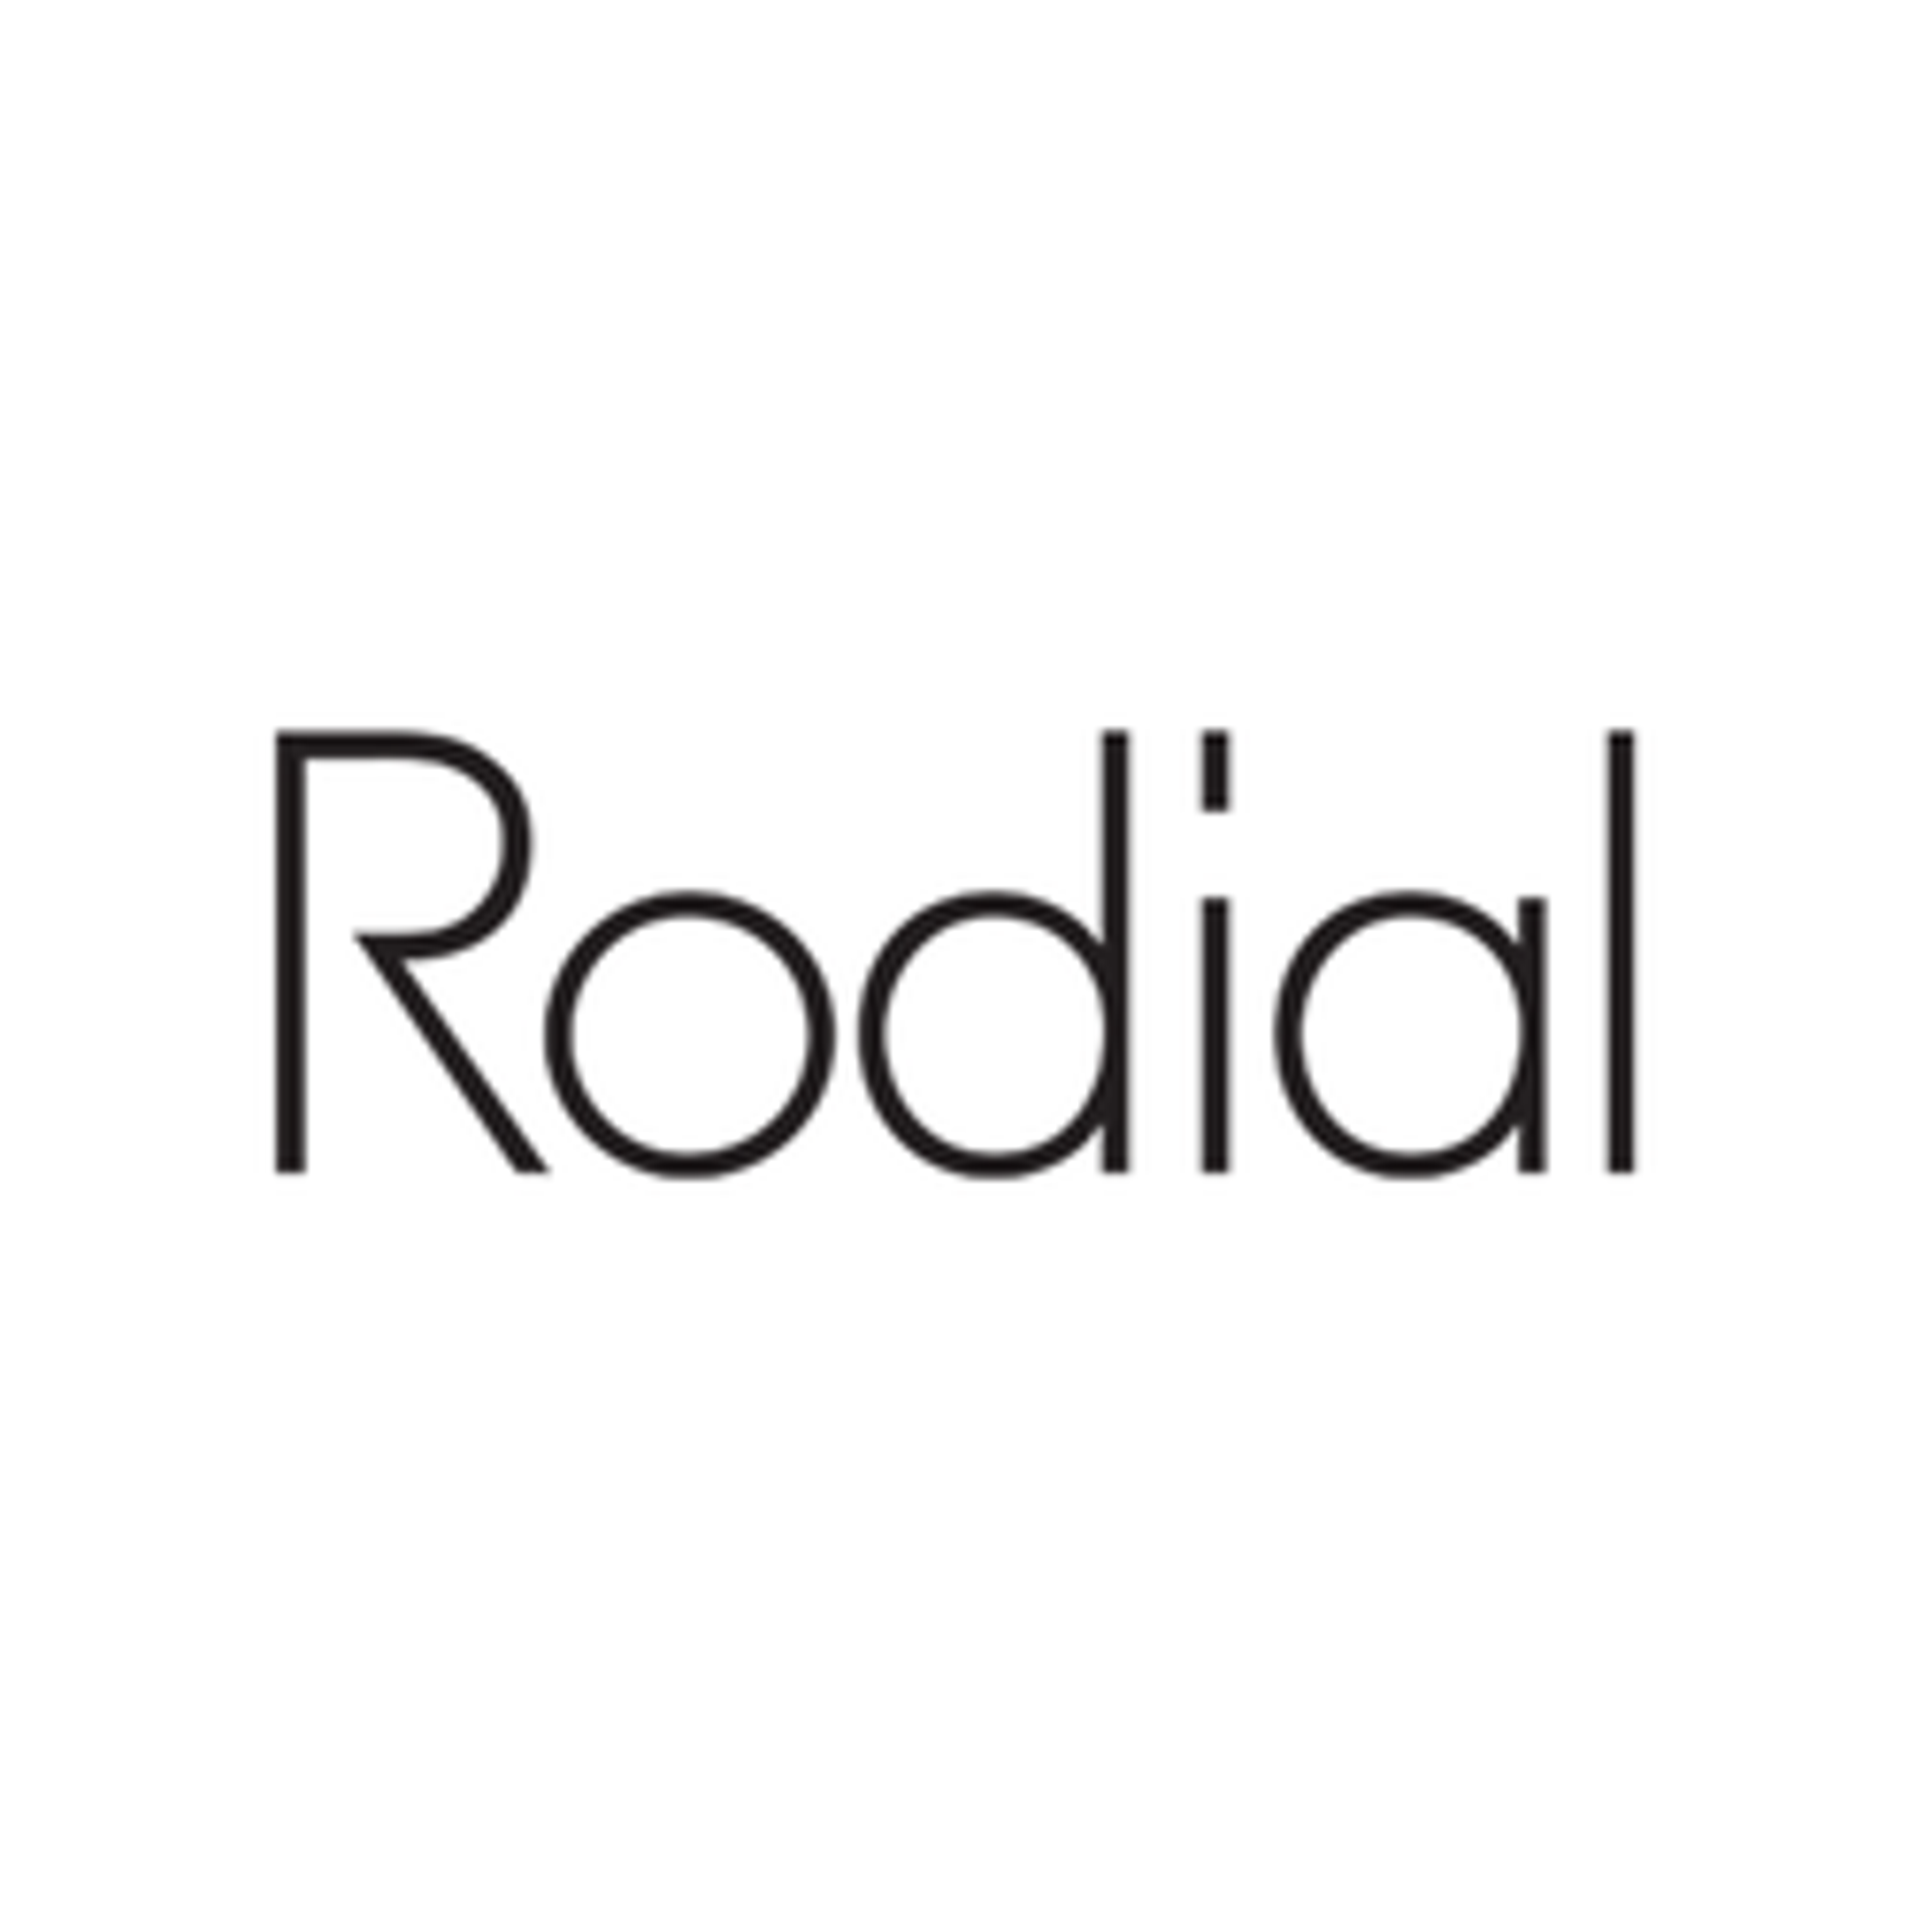  Rodial 